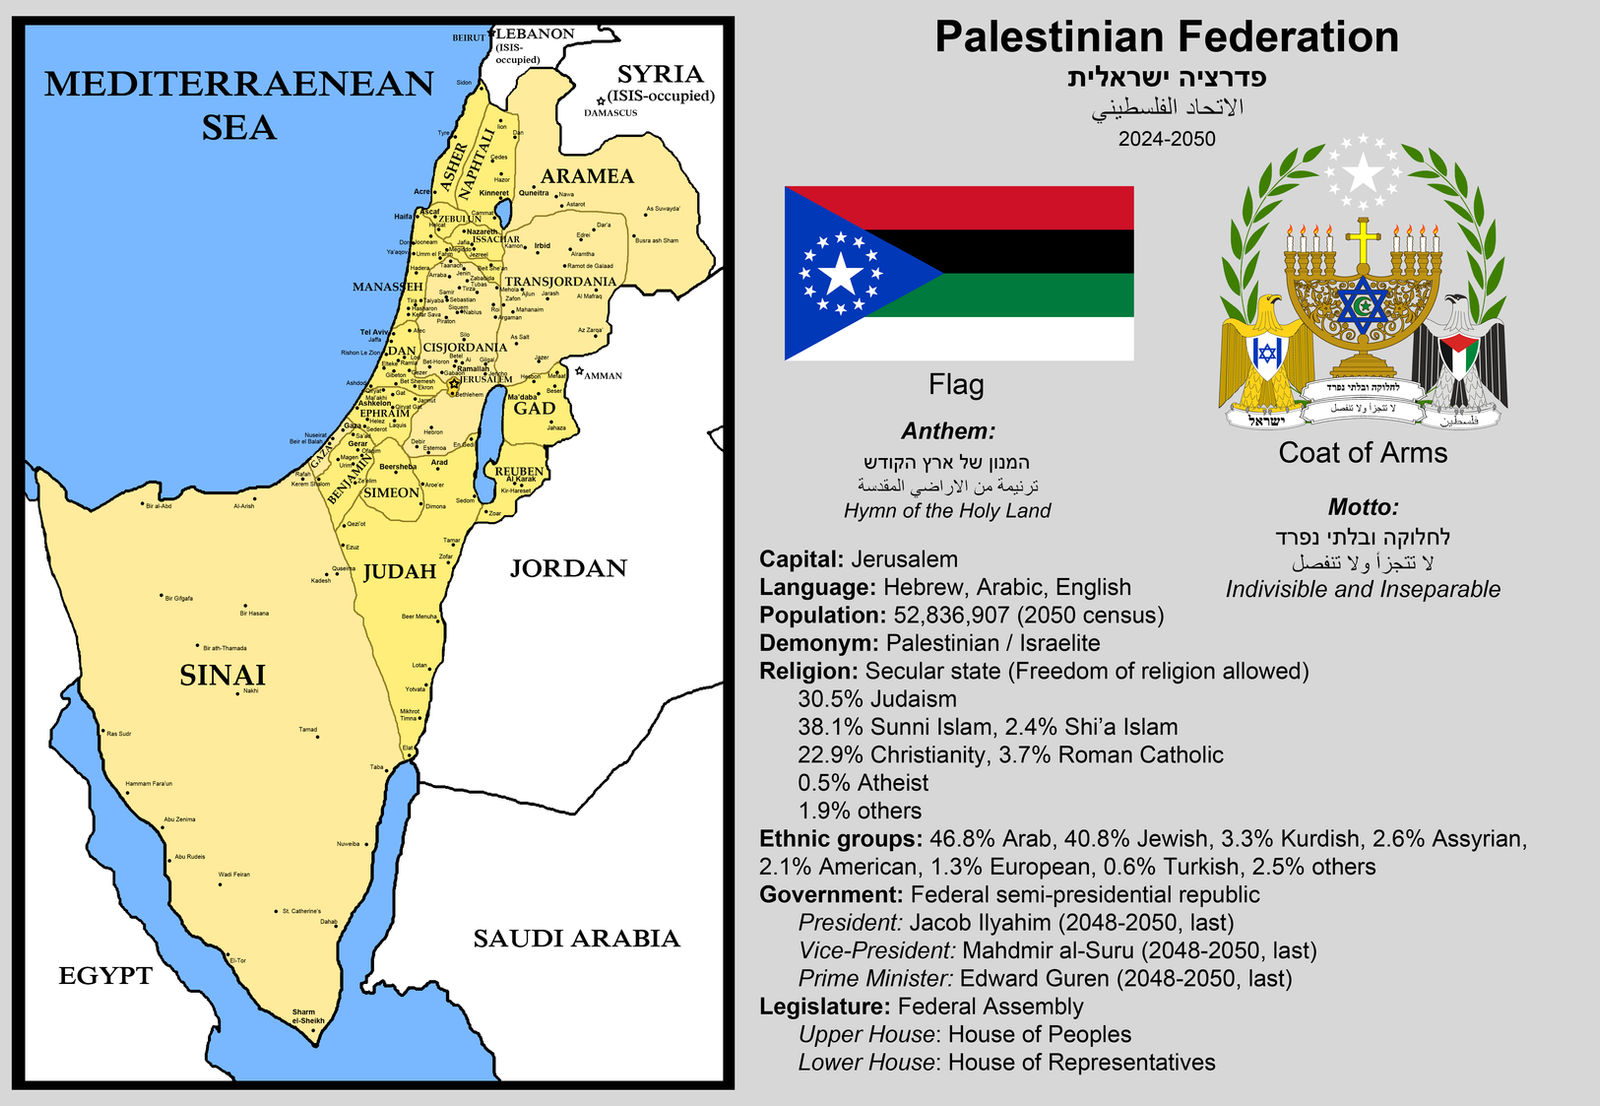 The Palestinian Federation (20242050) by CrisostomoIbarra on DeviantArt